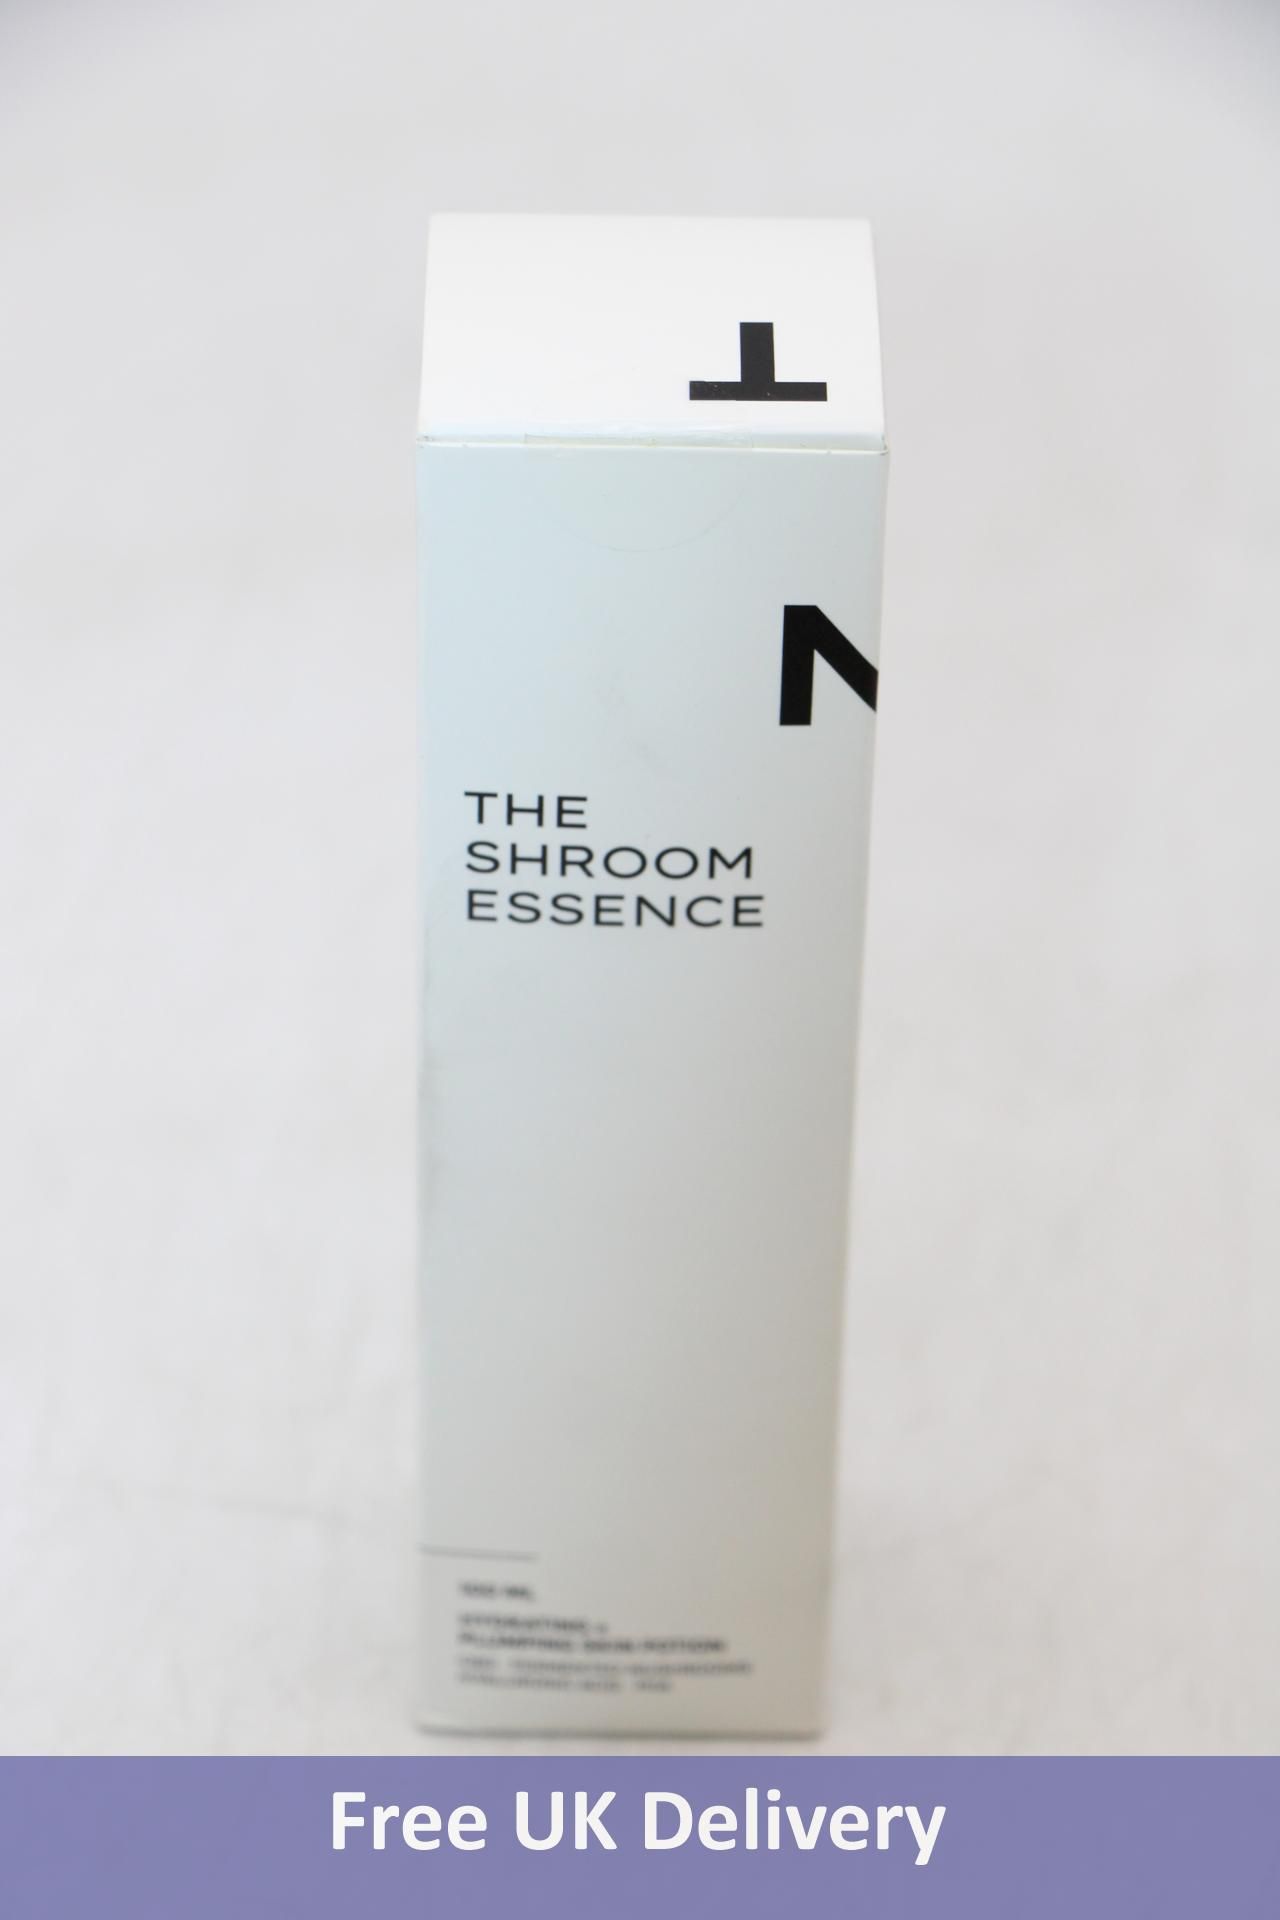 Ten Mantle The Shroom Essence Bottle Hydrating x Plumping Skin Potion Cbd, Size 100ml - Image 8 of 10